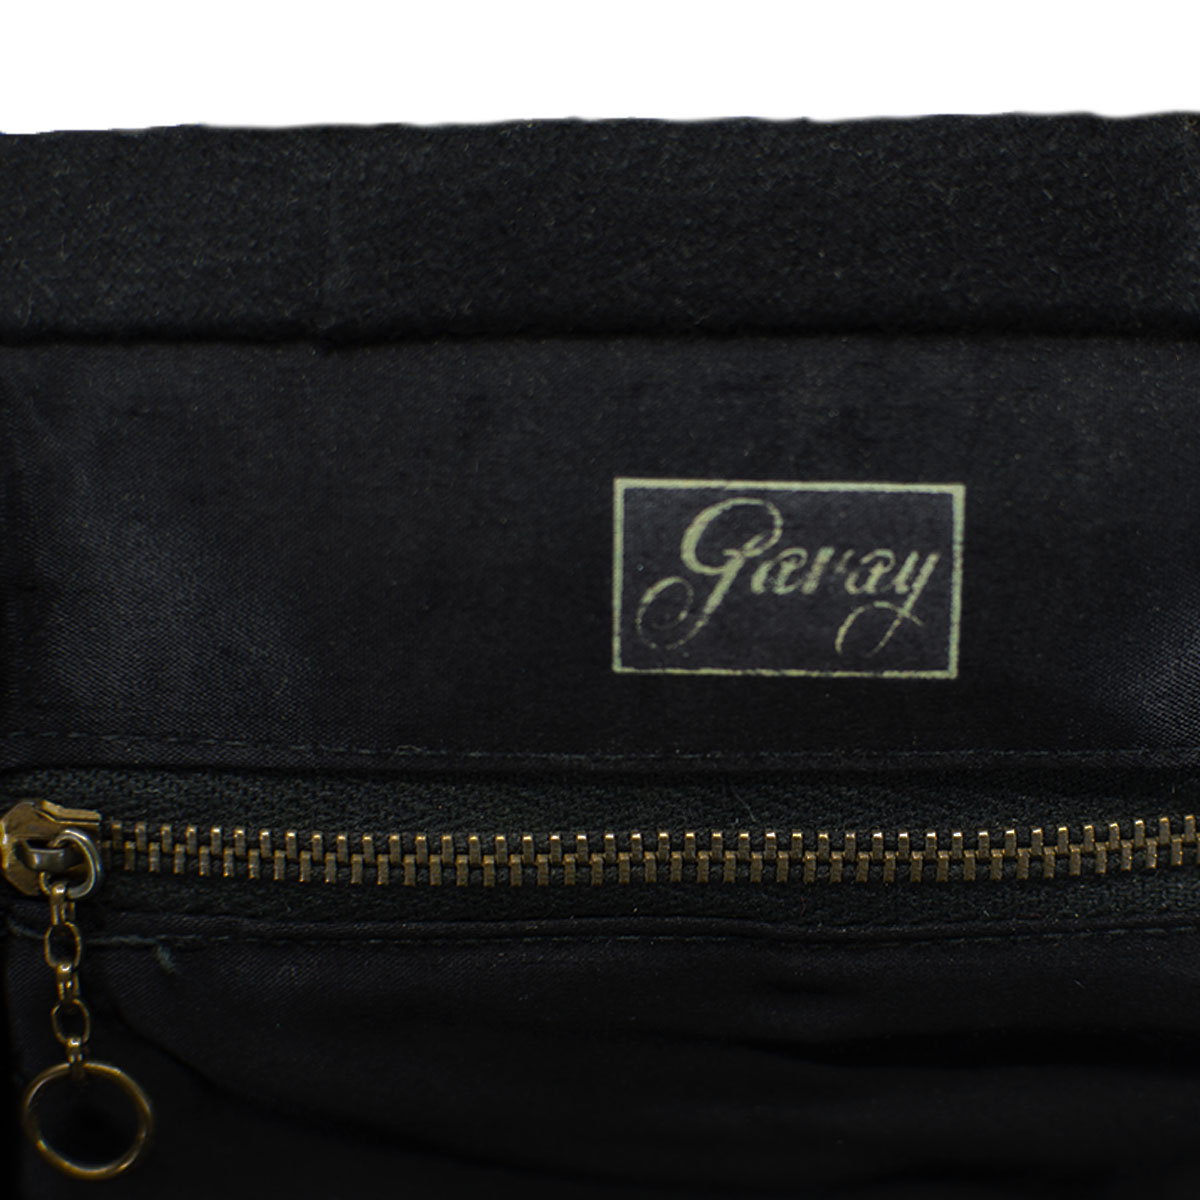 Black Caray purse